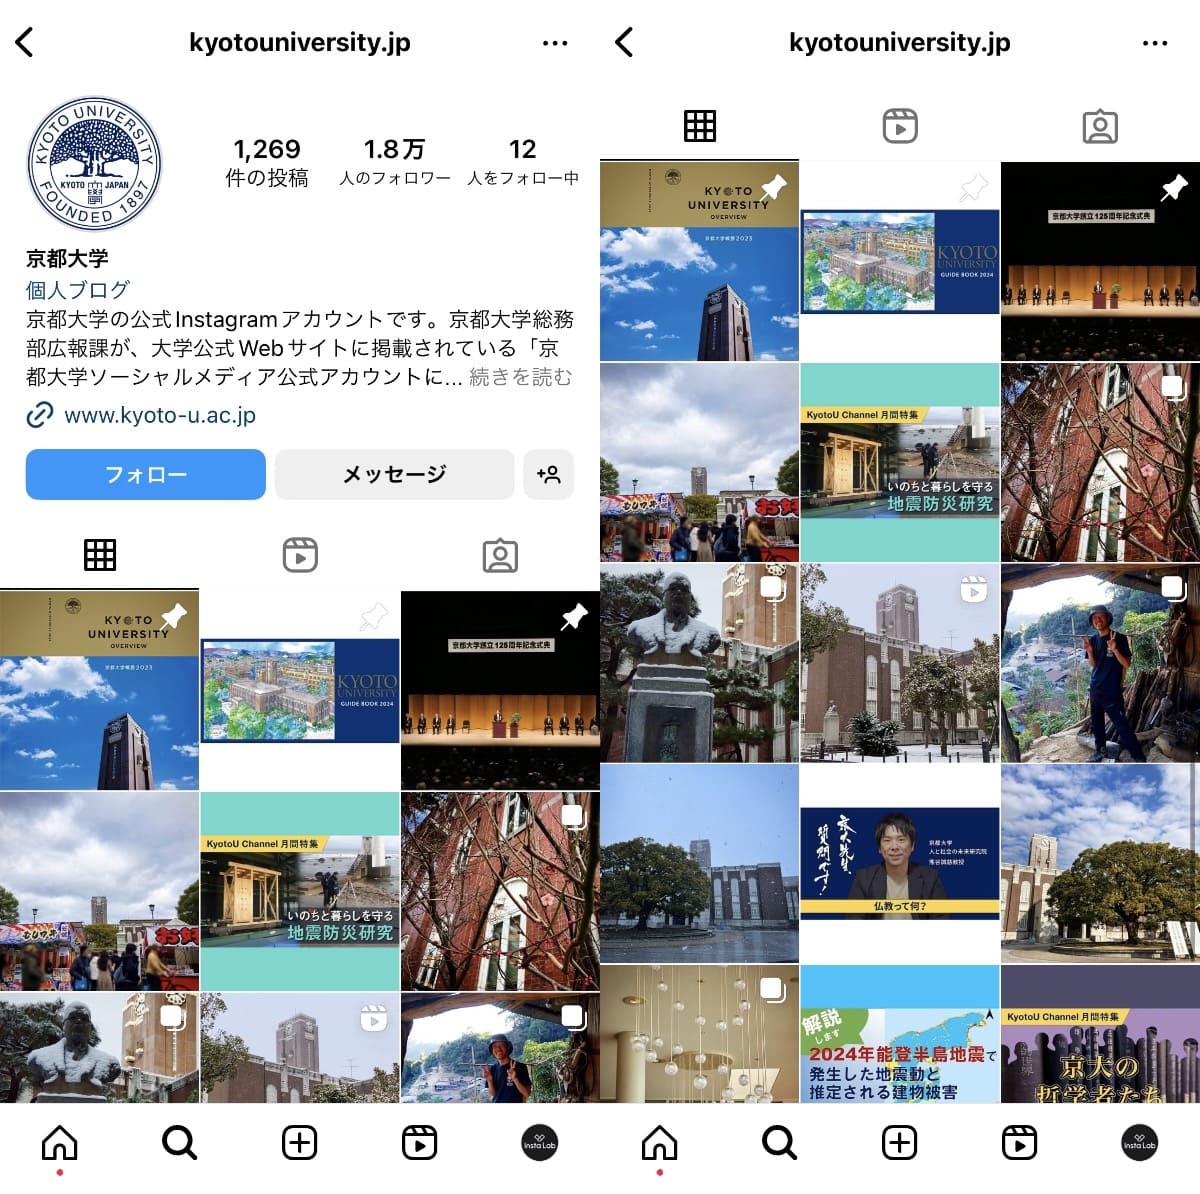 instagram-account-kyotouniversity-jp